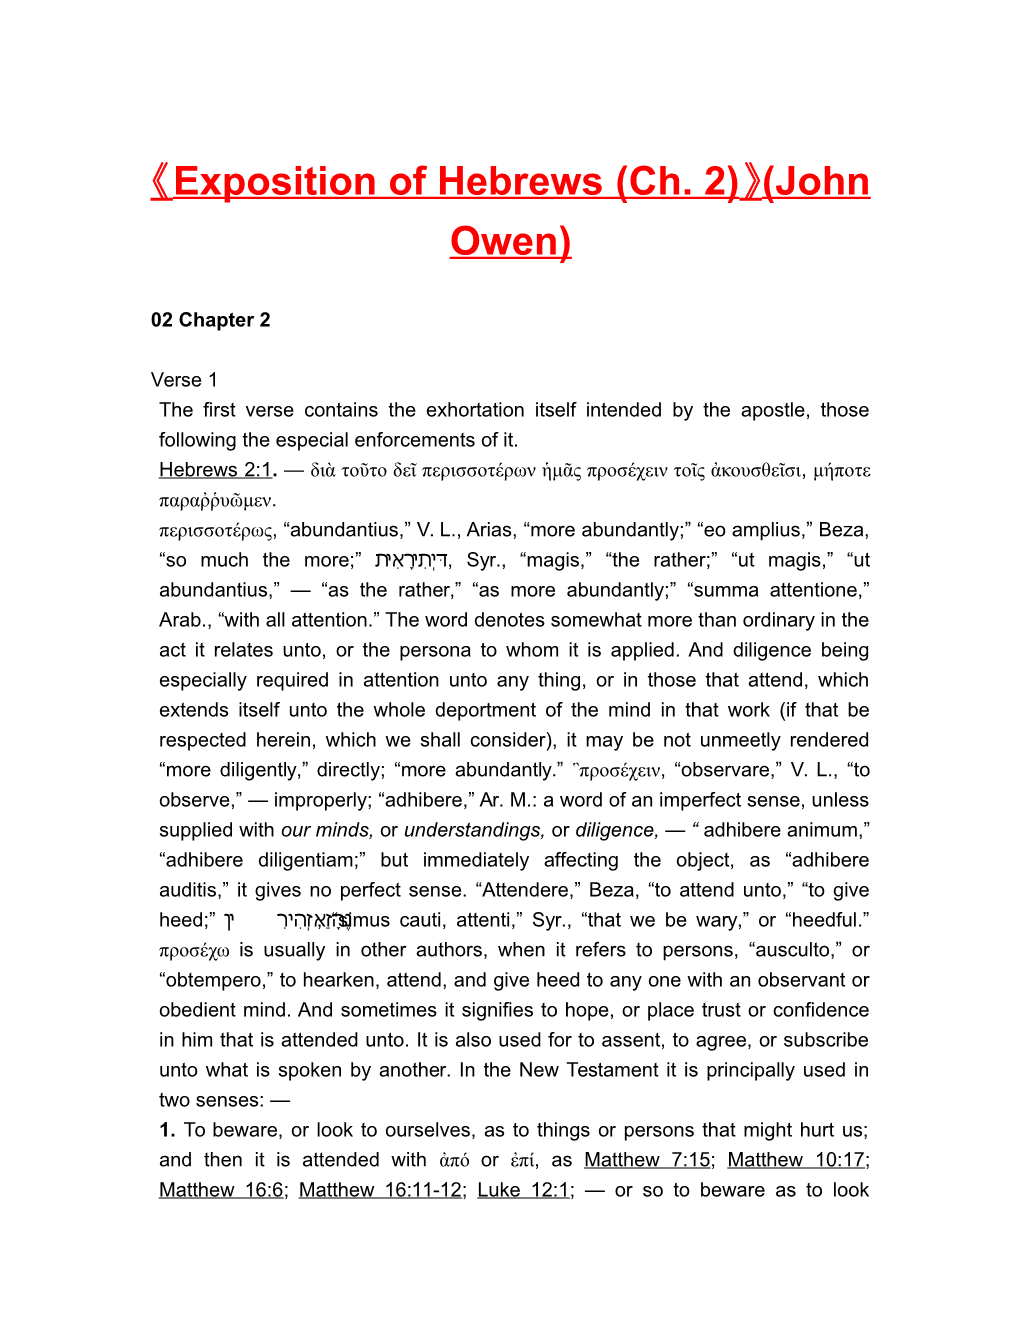 Exposition of Hebrews (Ch. 2) (John Owen)